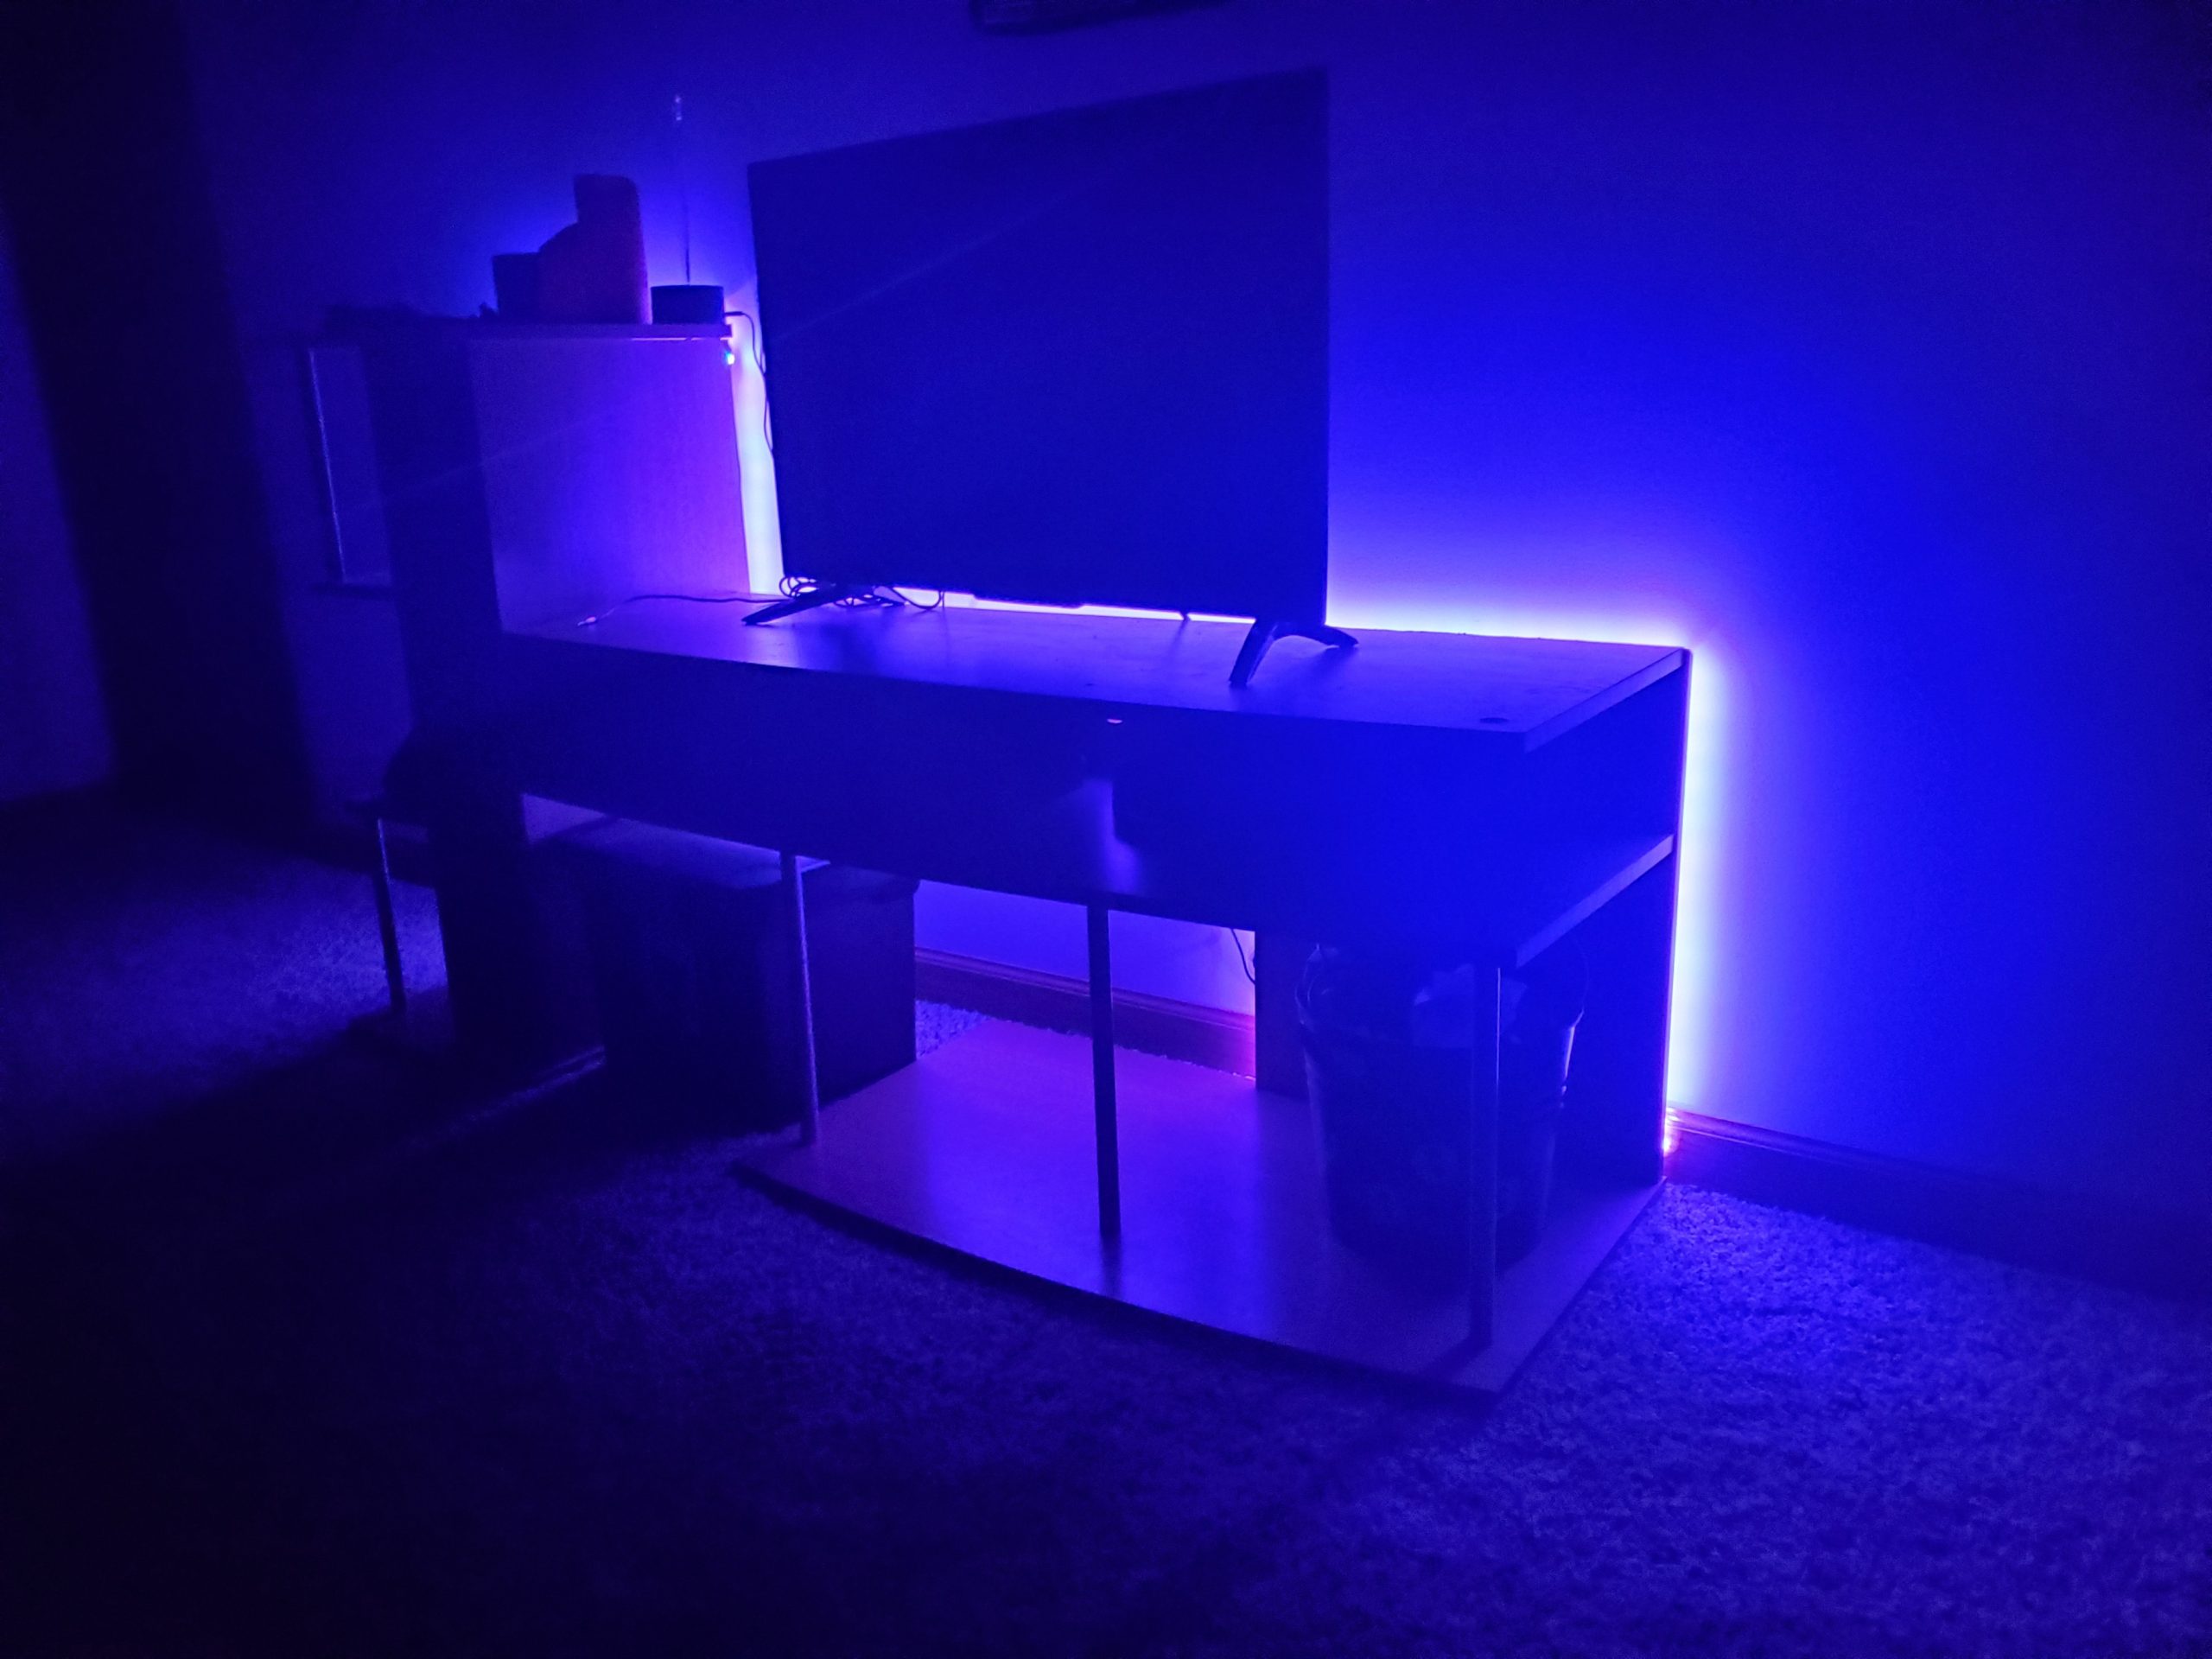 Nexlux LED Lights in Purple Color at Vigilant's House of Vekhayn.com